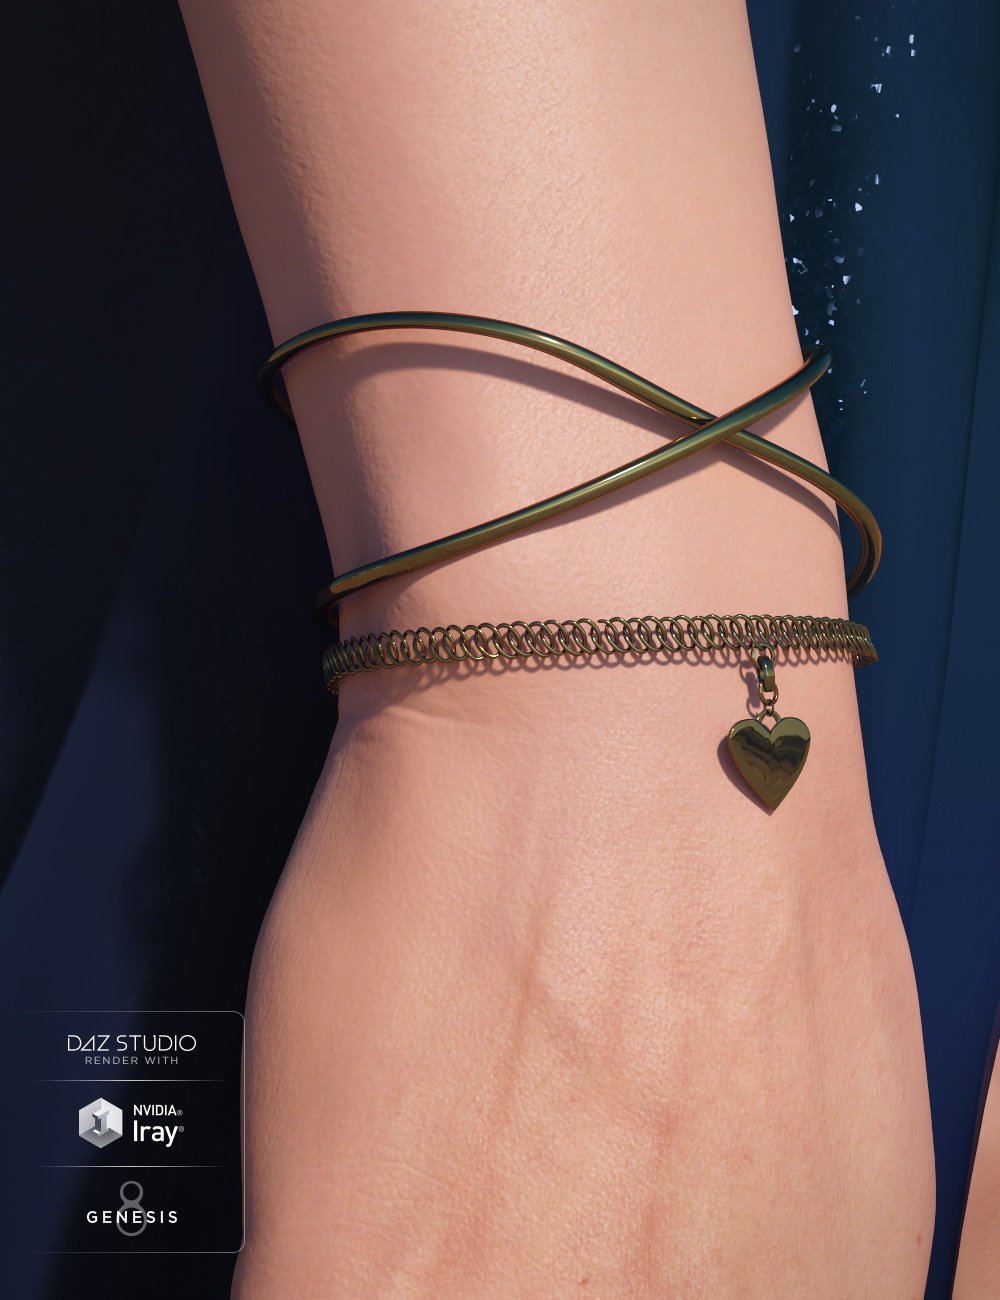 dForce Chiffon Slip Dress for Genesis 8 Female(s) by: Ryverthorn, 3D Models by Daz 3D